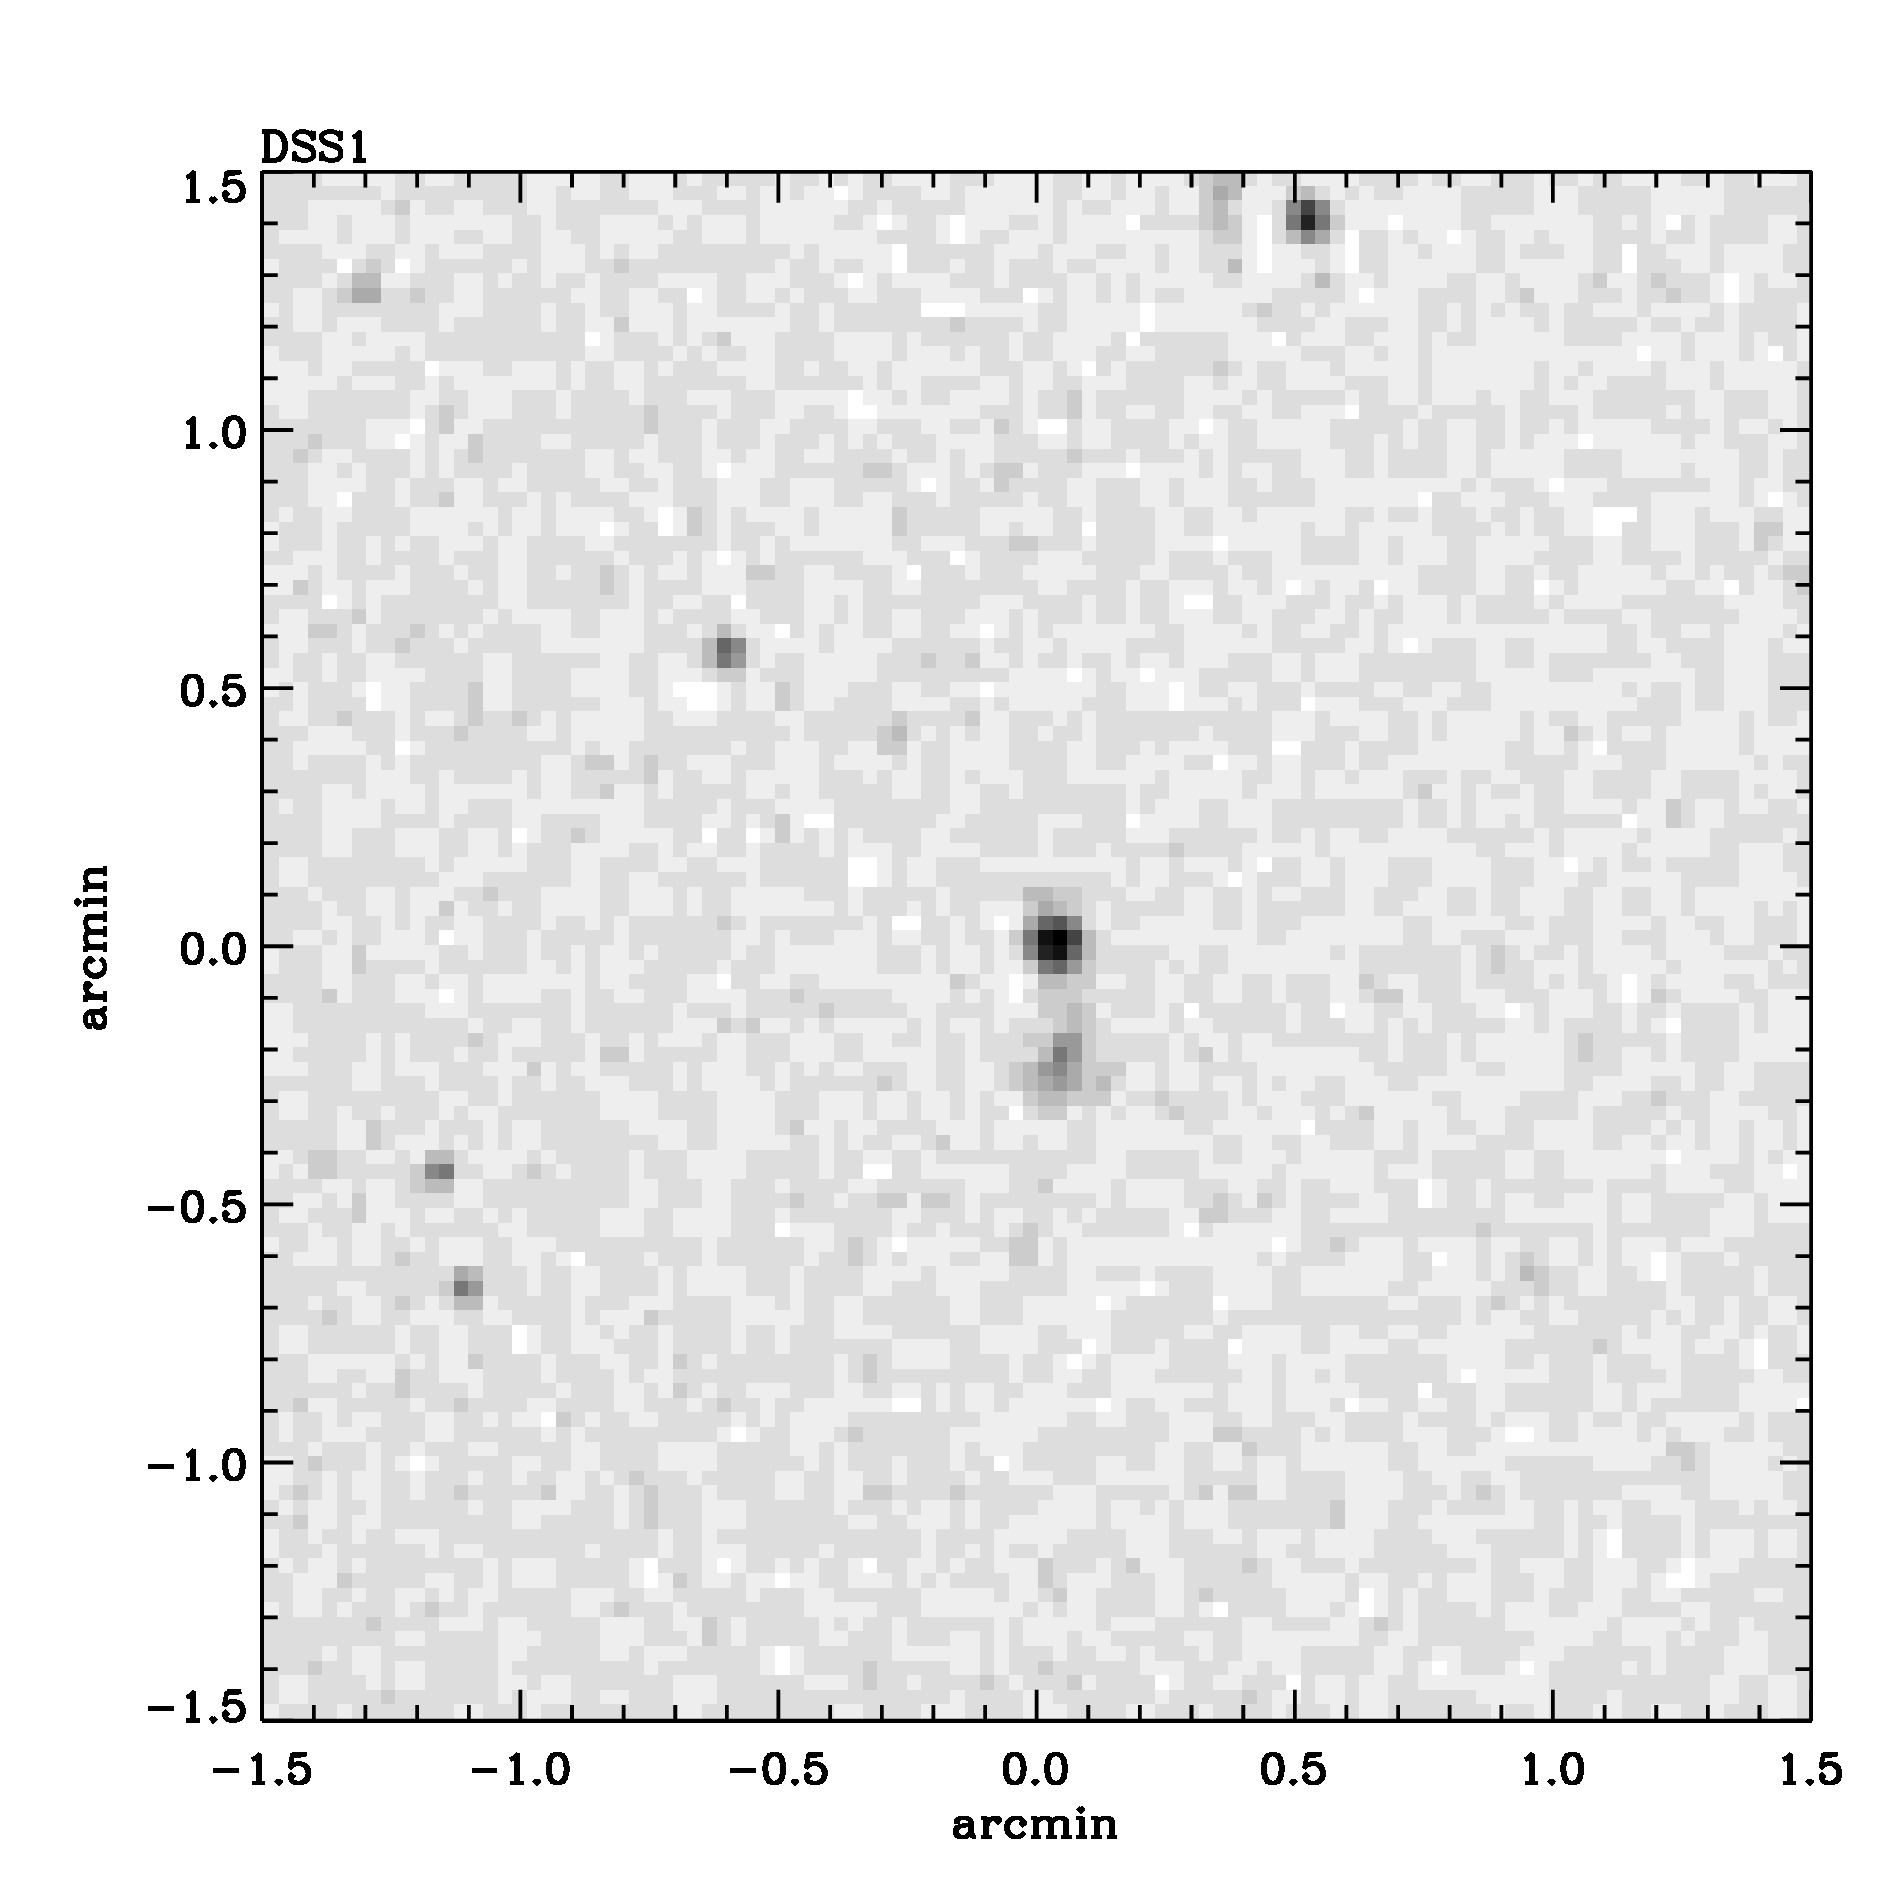 Optical image for SWIFT J0354.2+0250